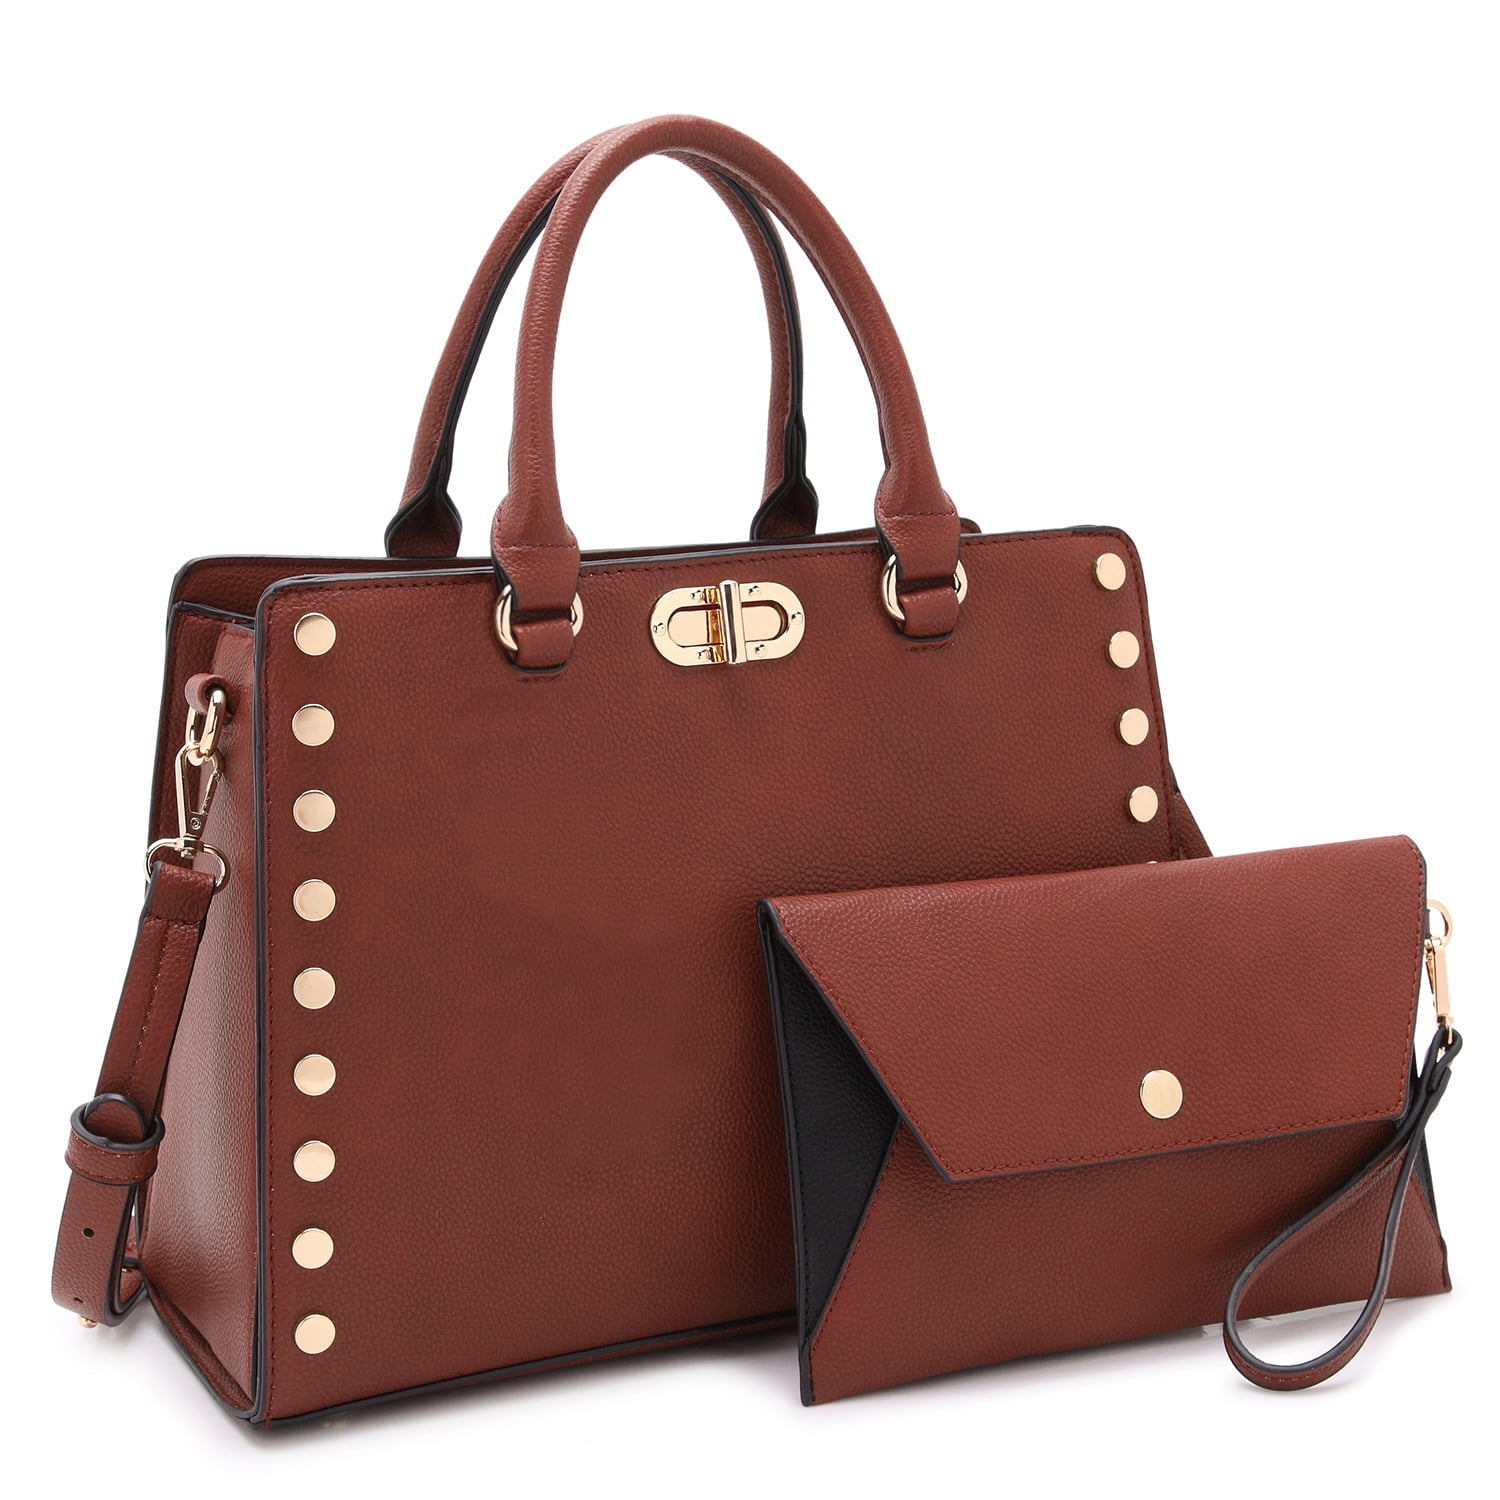 Dasein Purses and Handbags for Women Satchel Bags top Handle Shoulder ...